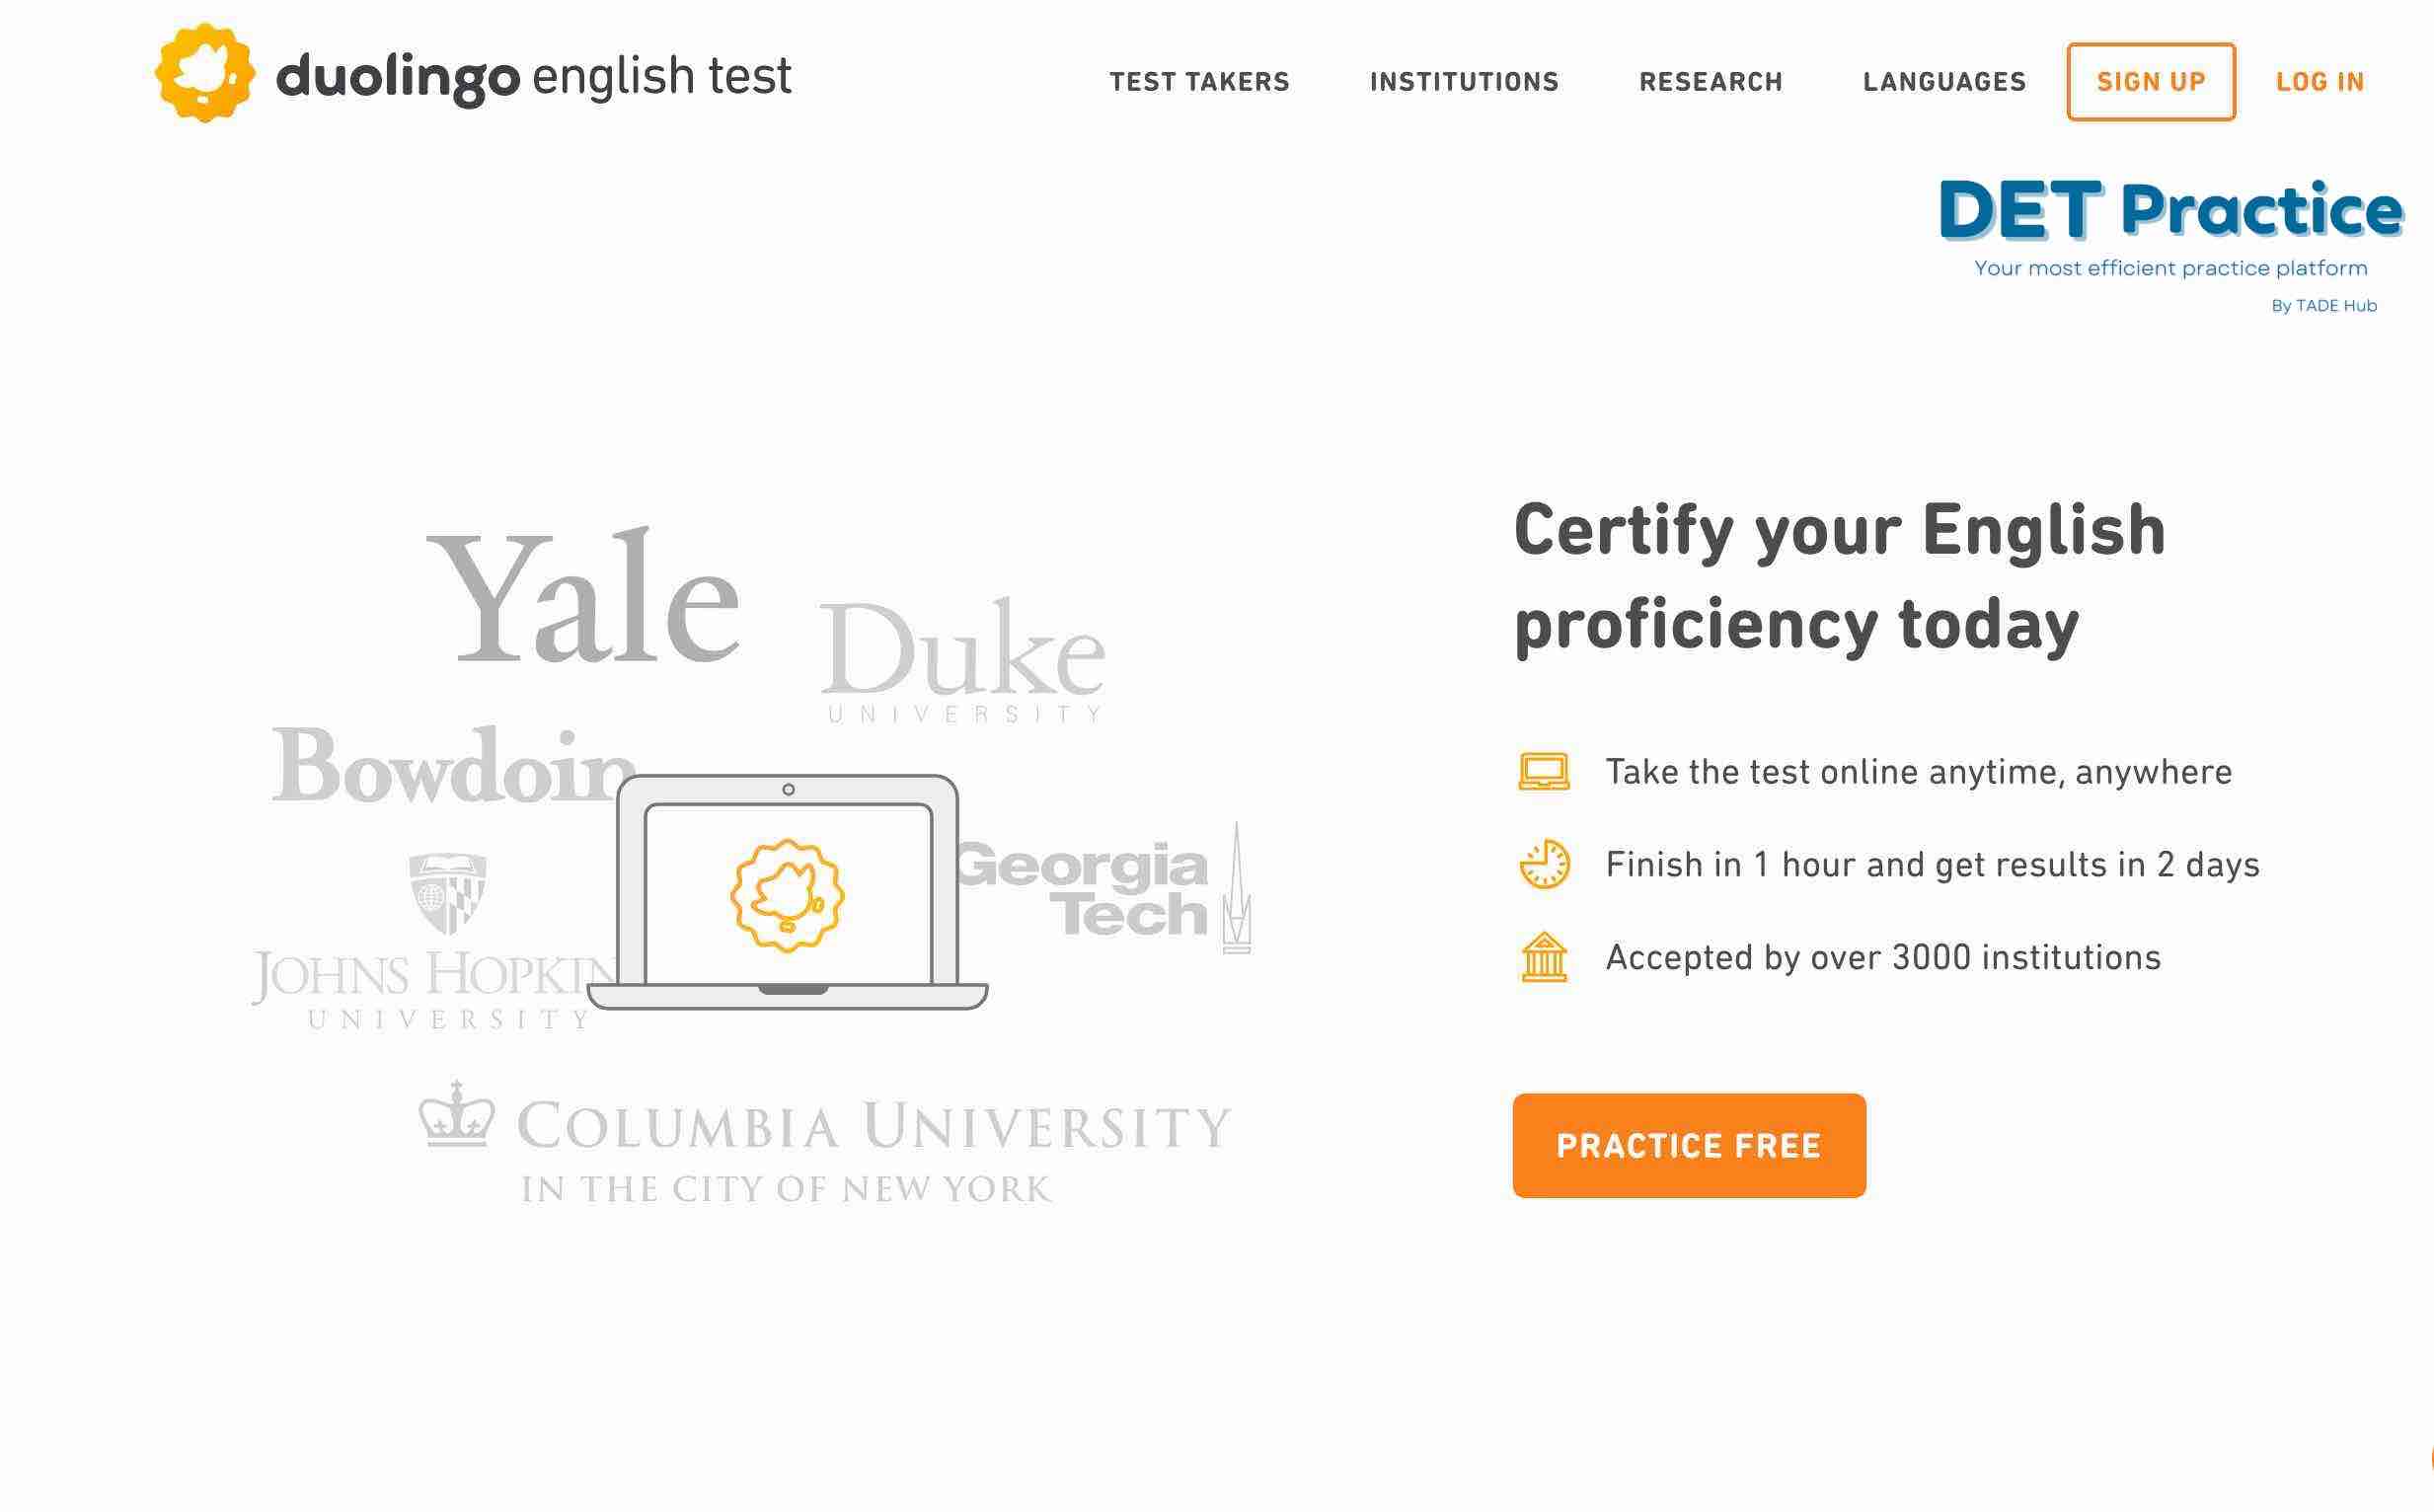 duolingo-english-test-DET, det practice platform, Duolingo Test preparation, det admission process